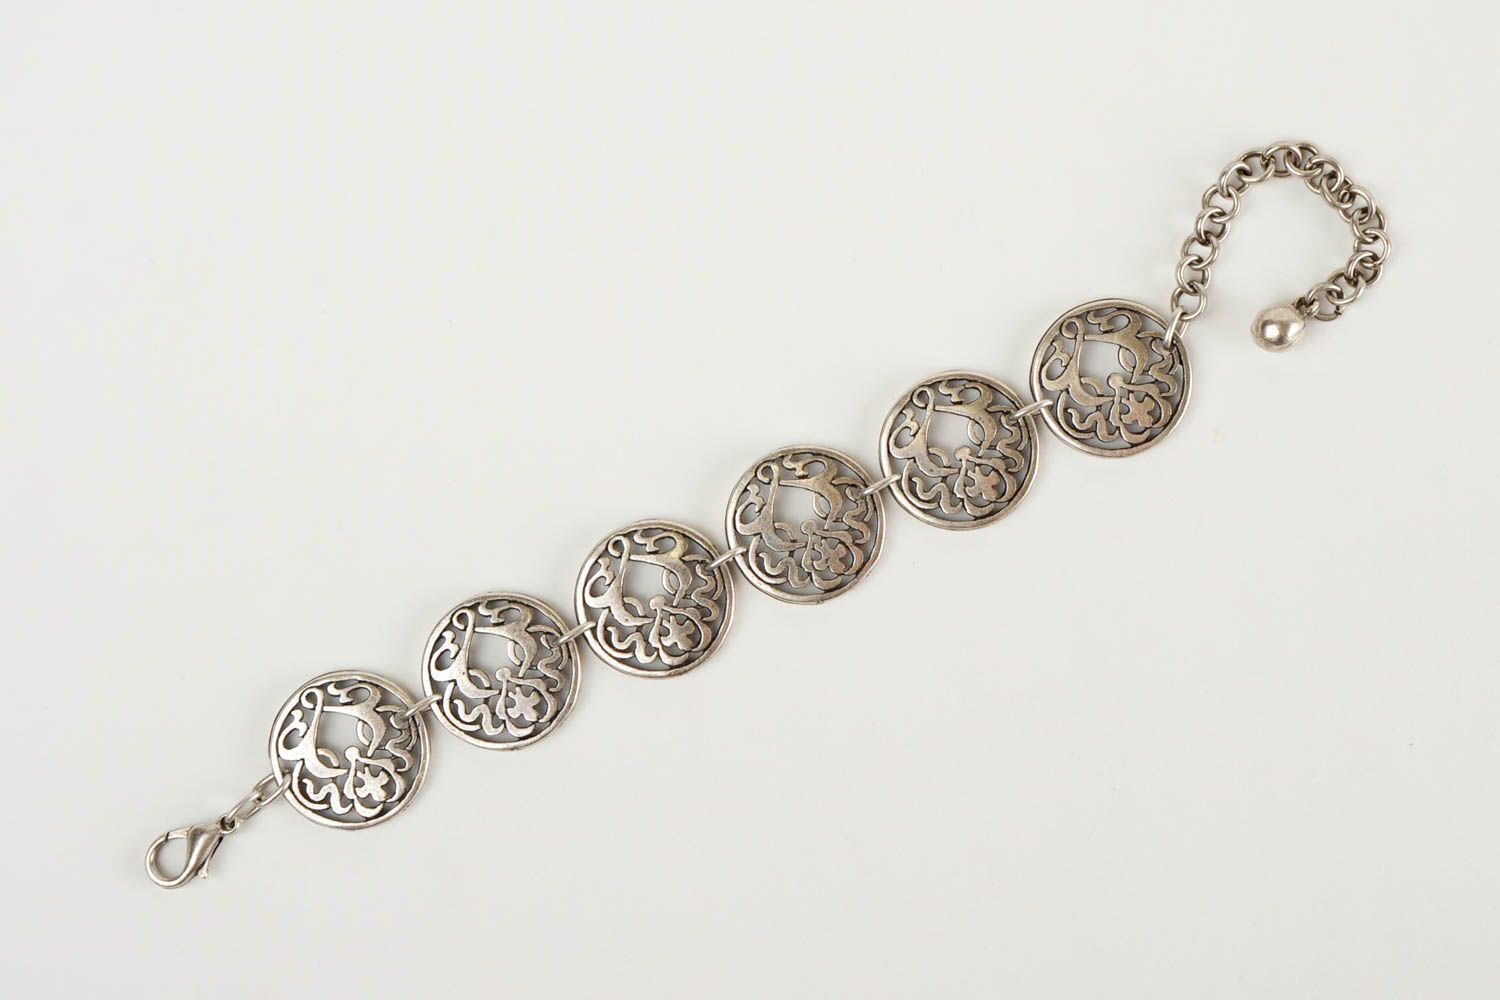 Beautiful handmade metal bracelet designs artisan jewelry fashion trends photo 4